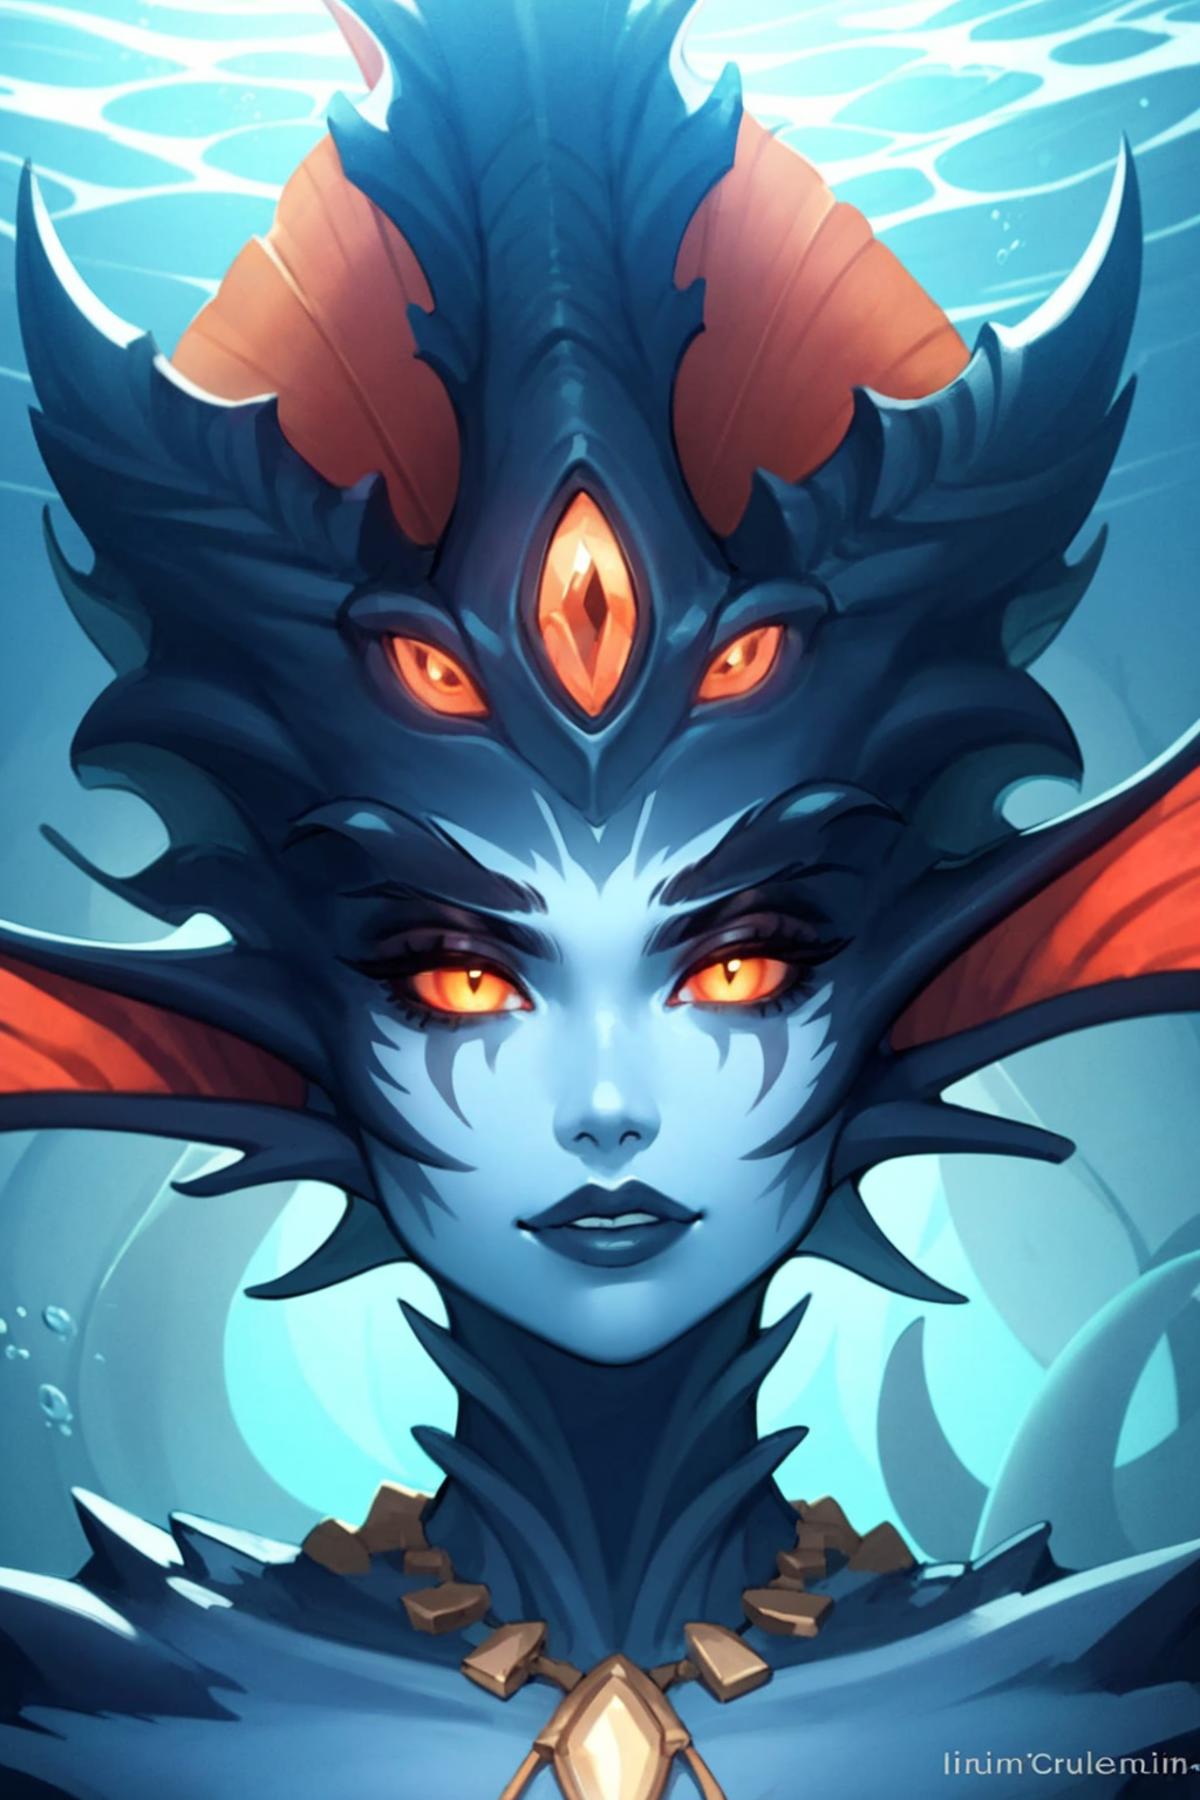 Queen Azshara | World_of_Warcraft image by HeraldOfTrivia